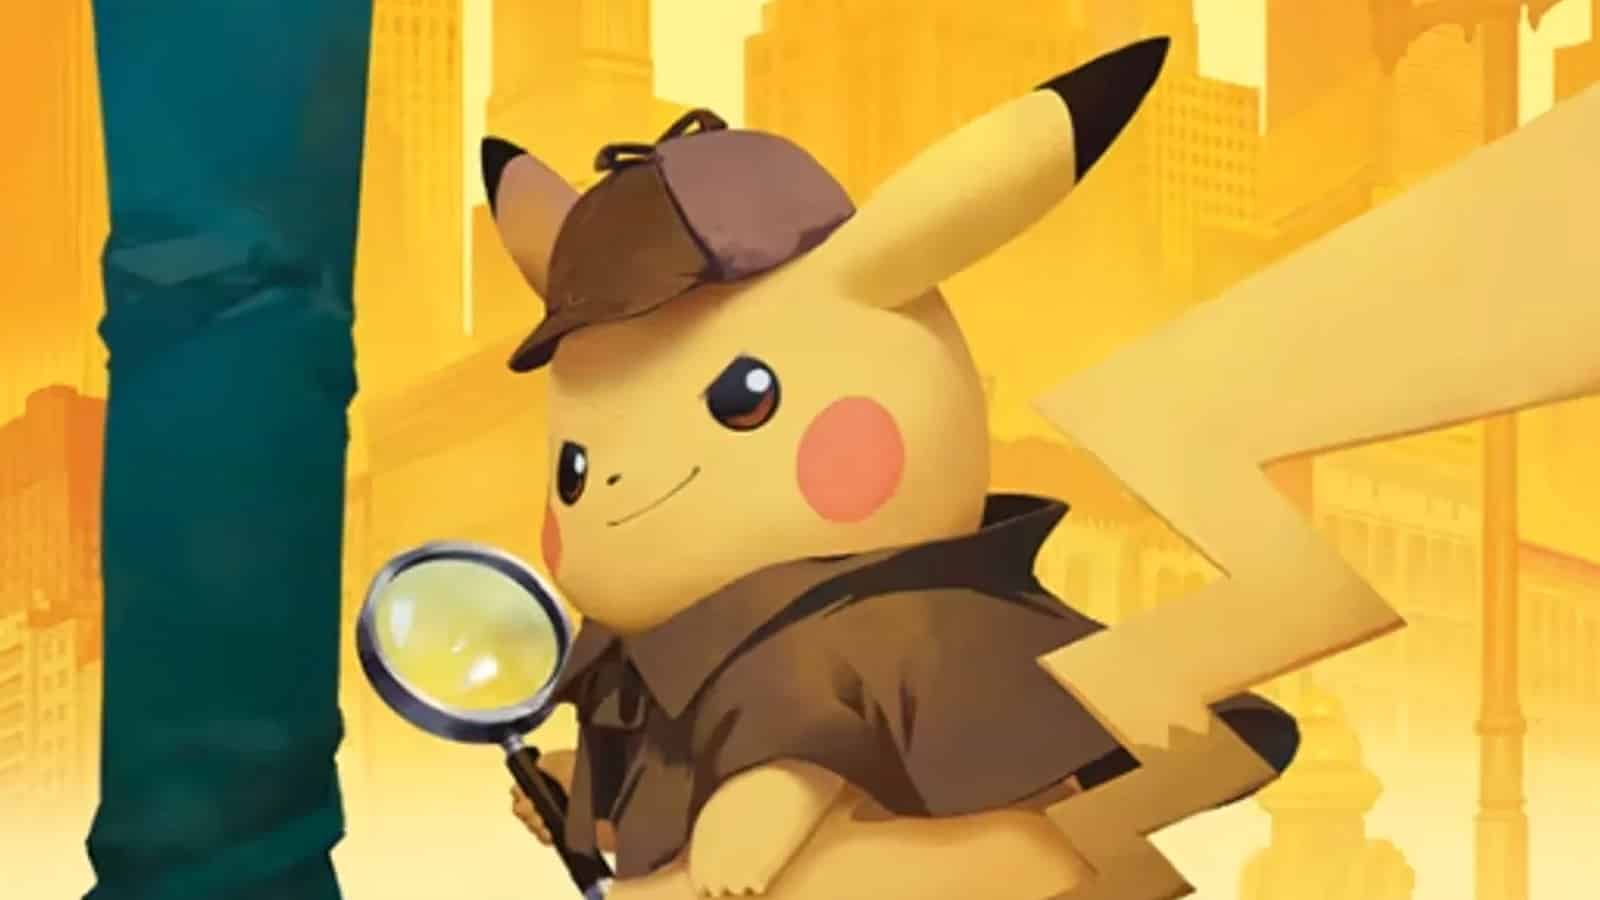 detective pikachu 2